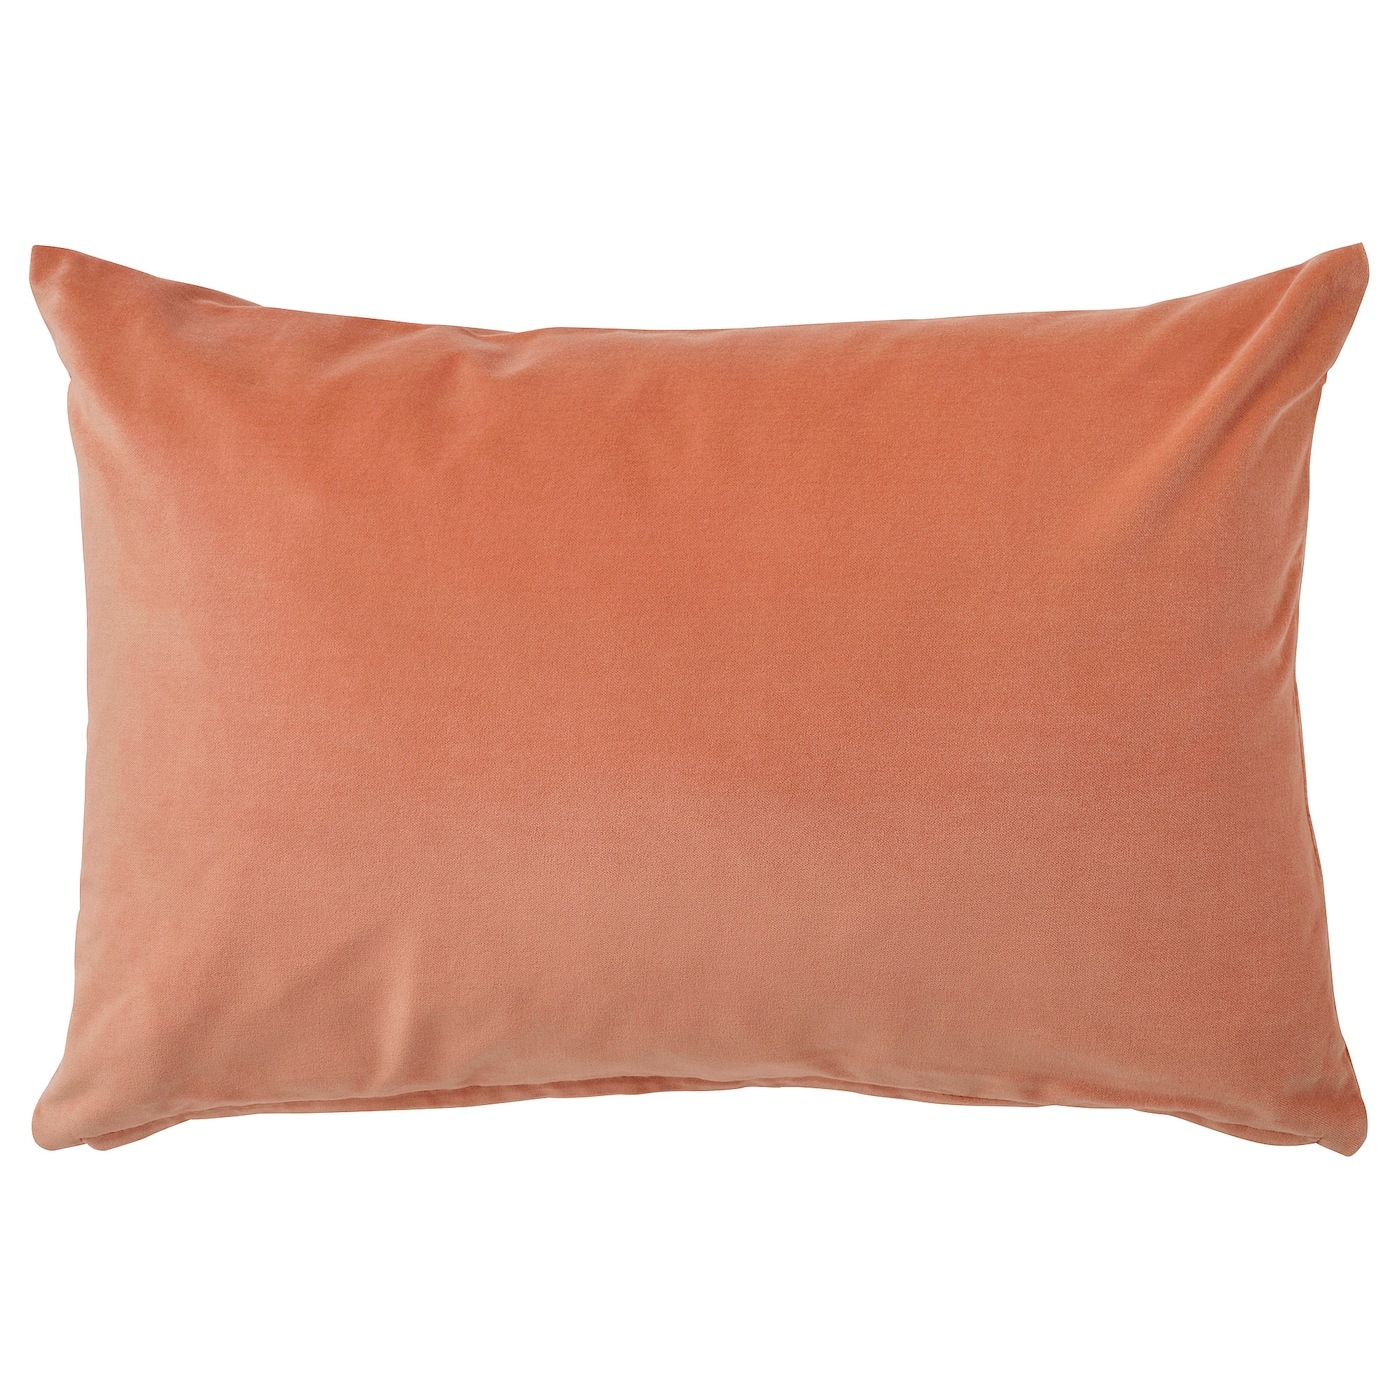 Оранжевая наволочка. Подушка икеа коричнево оранжевый. Икеа наволочки декоративные. Коричнево оранжевая подушка. Подушка оранжевая икеа.